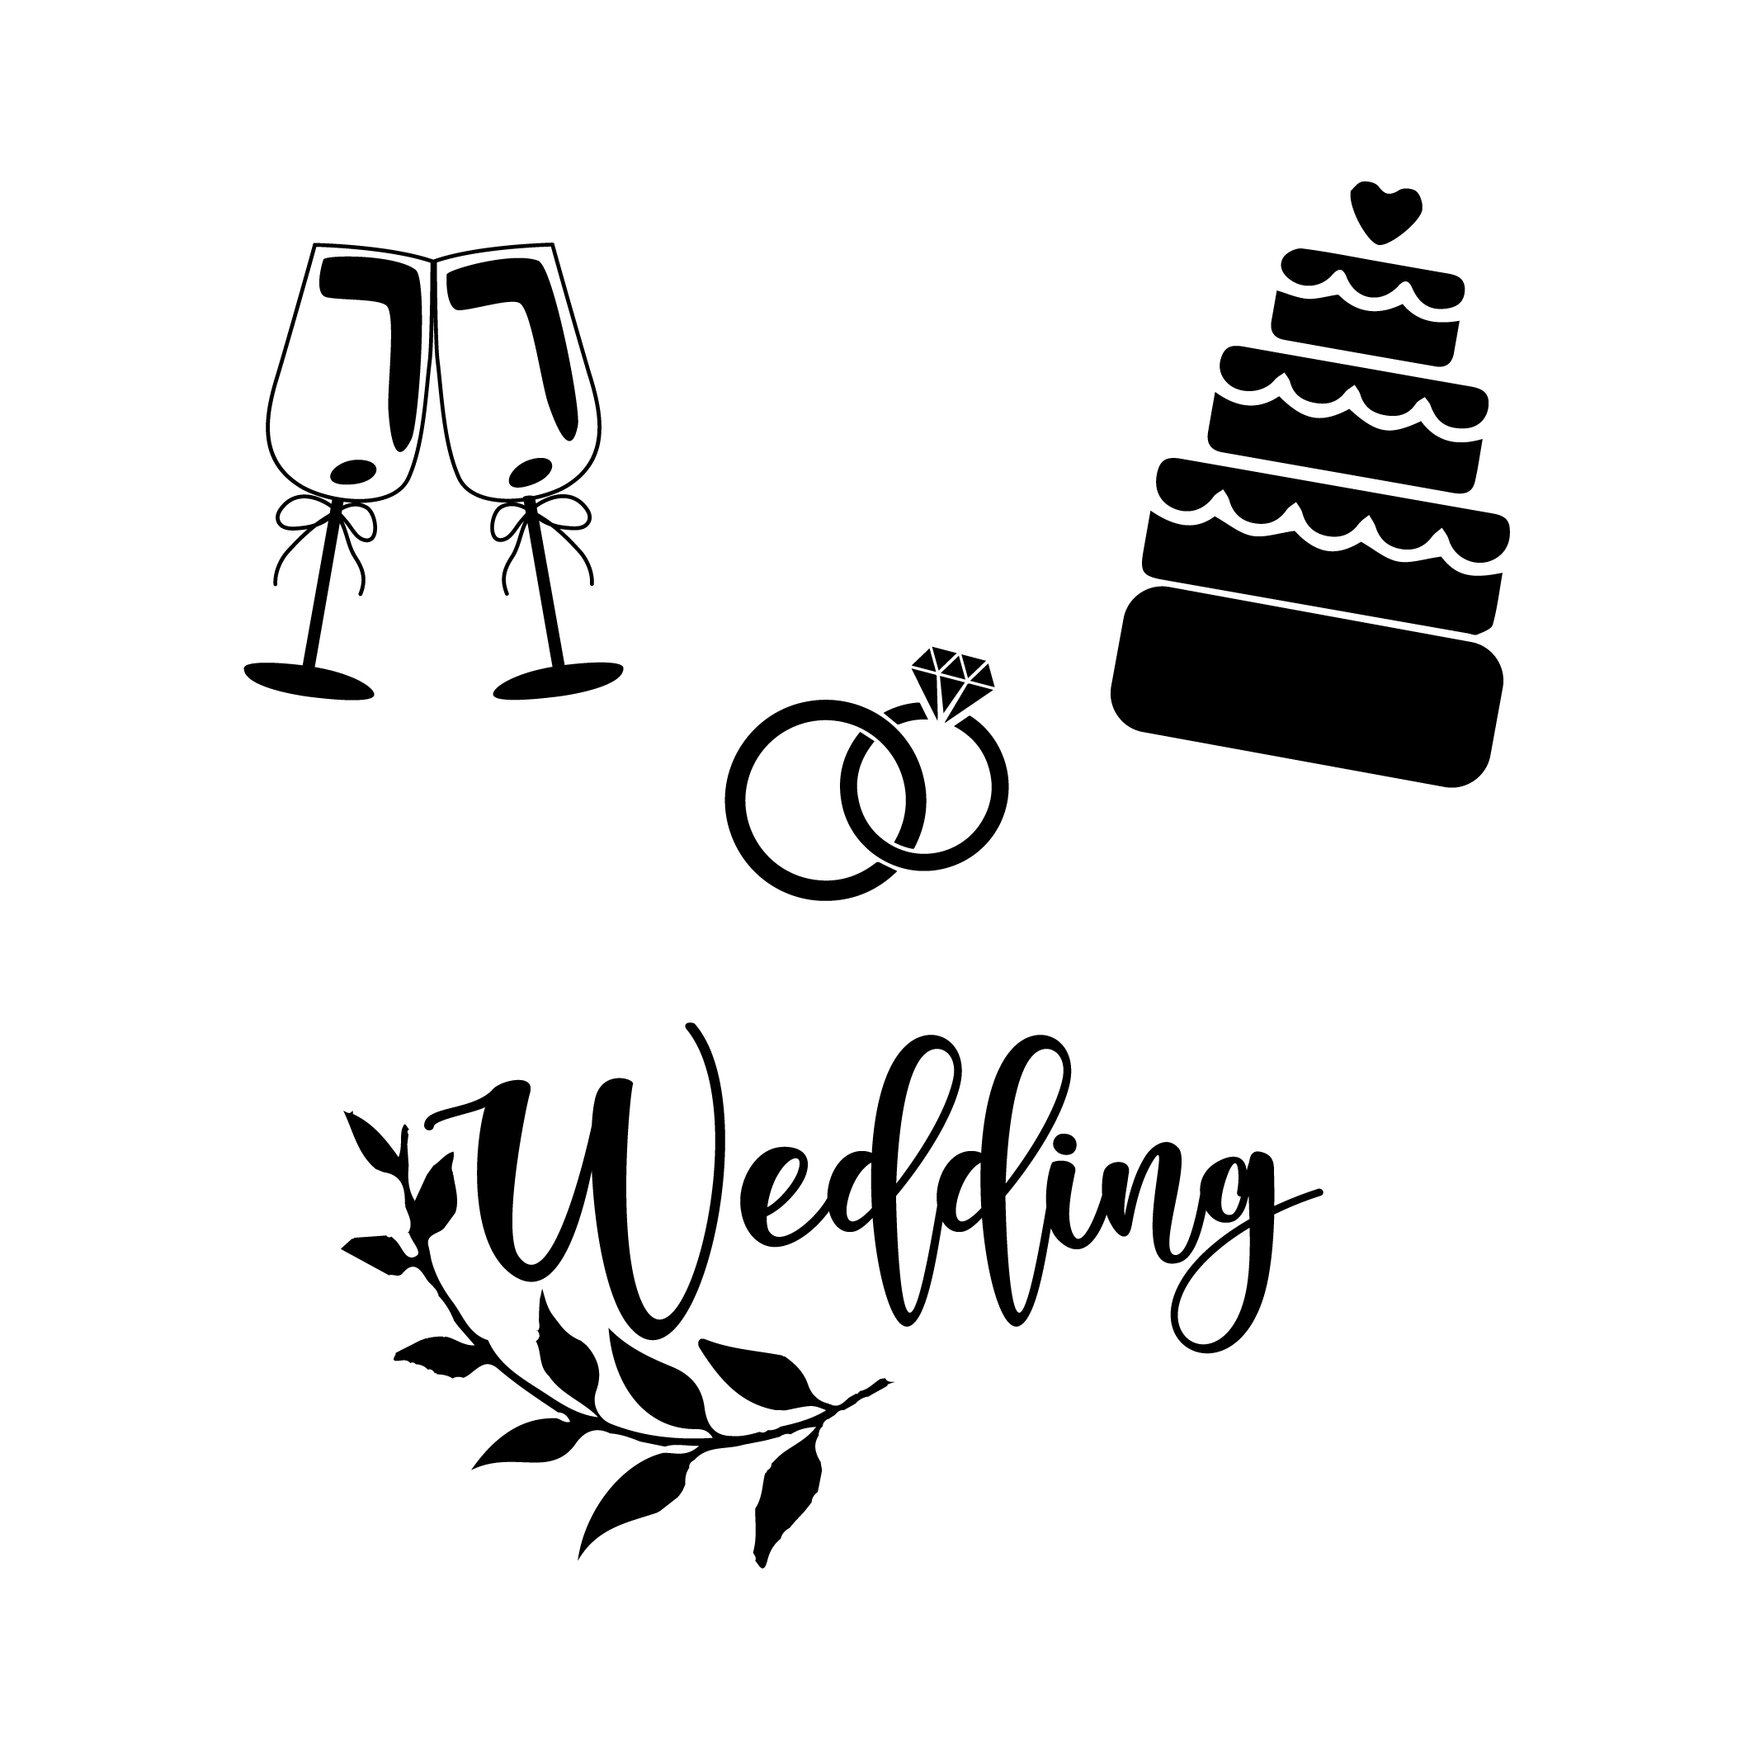 Free Wedding Elements Silhouette in Illustrator, EPS, SVG, JPG, PNG